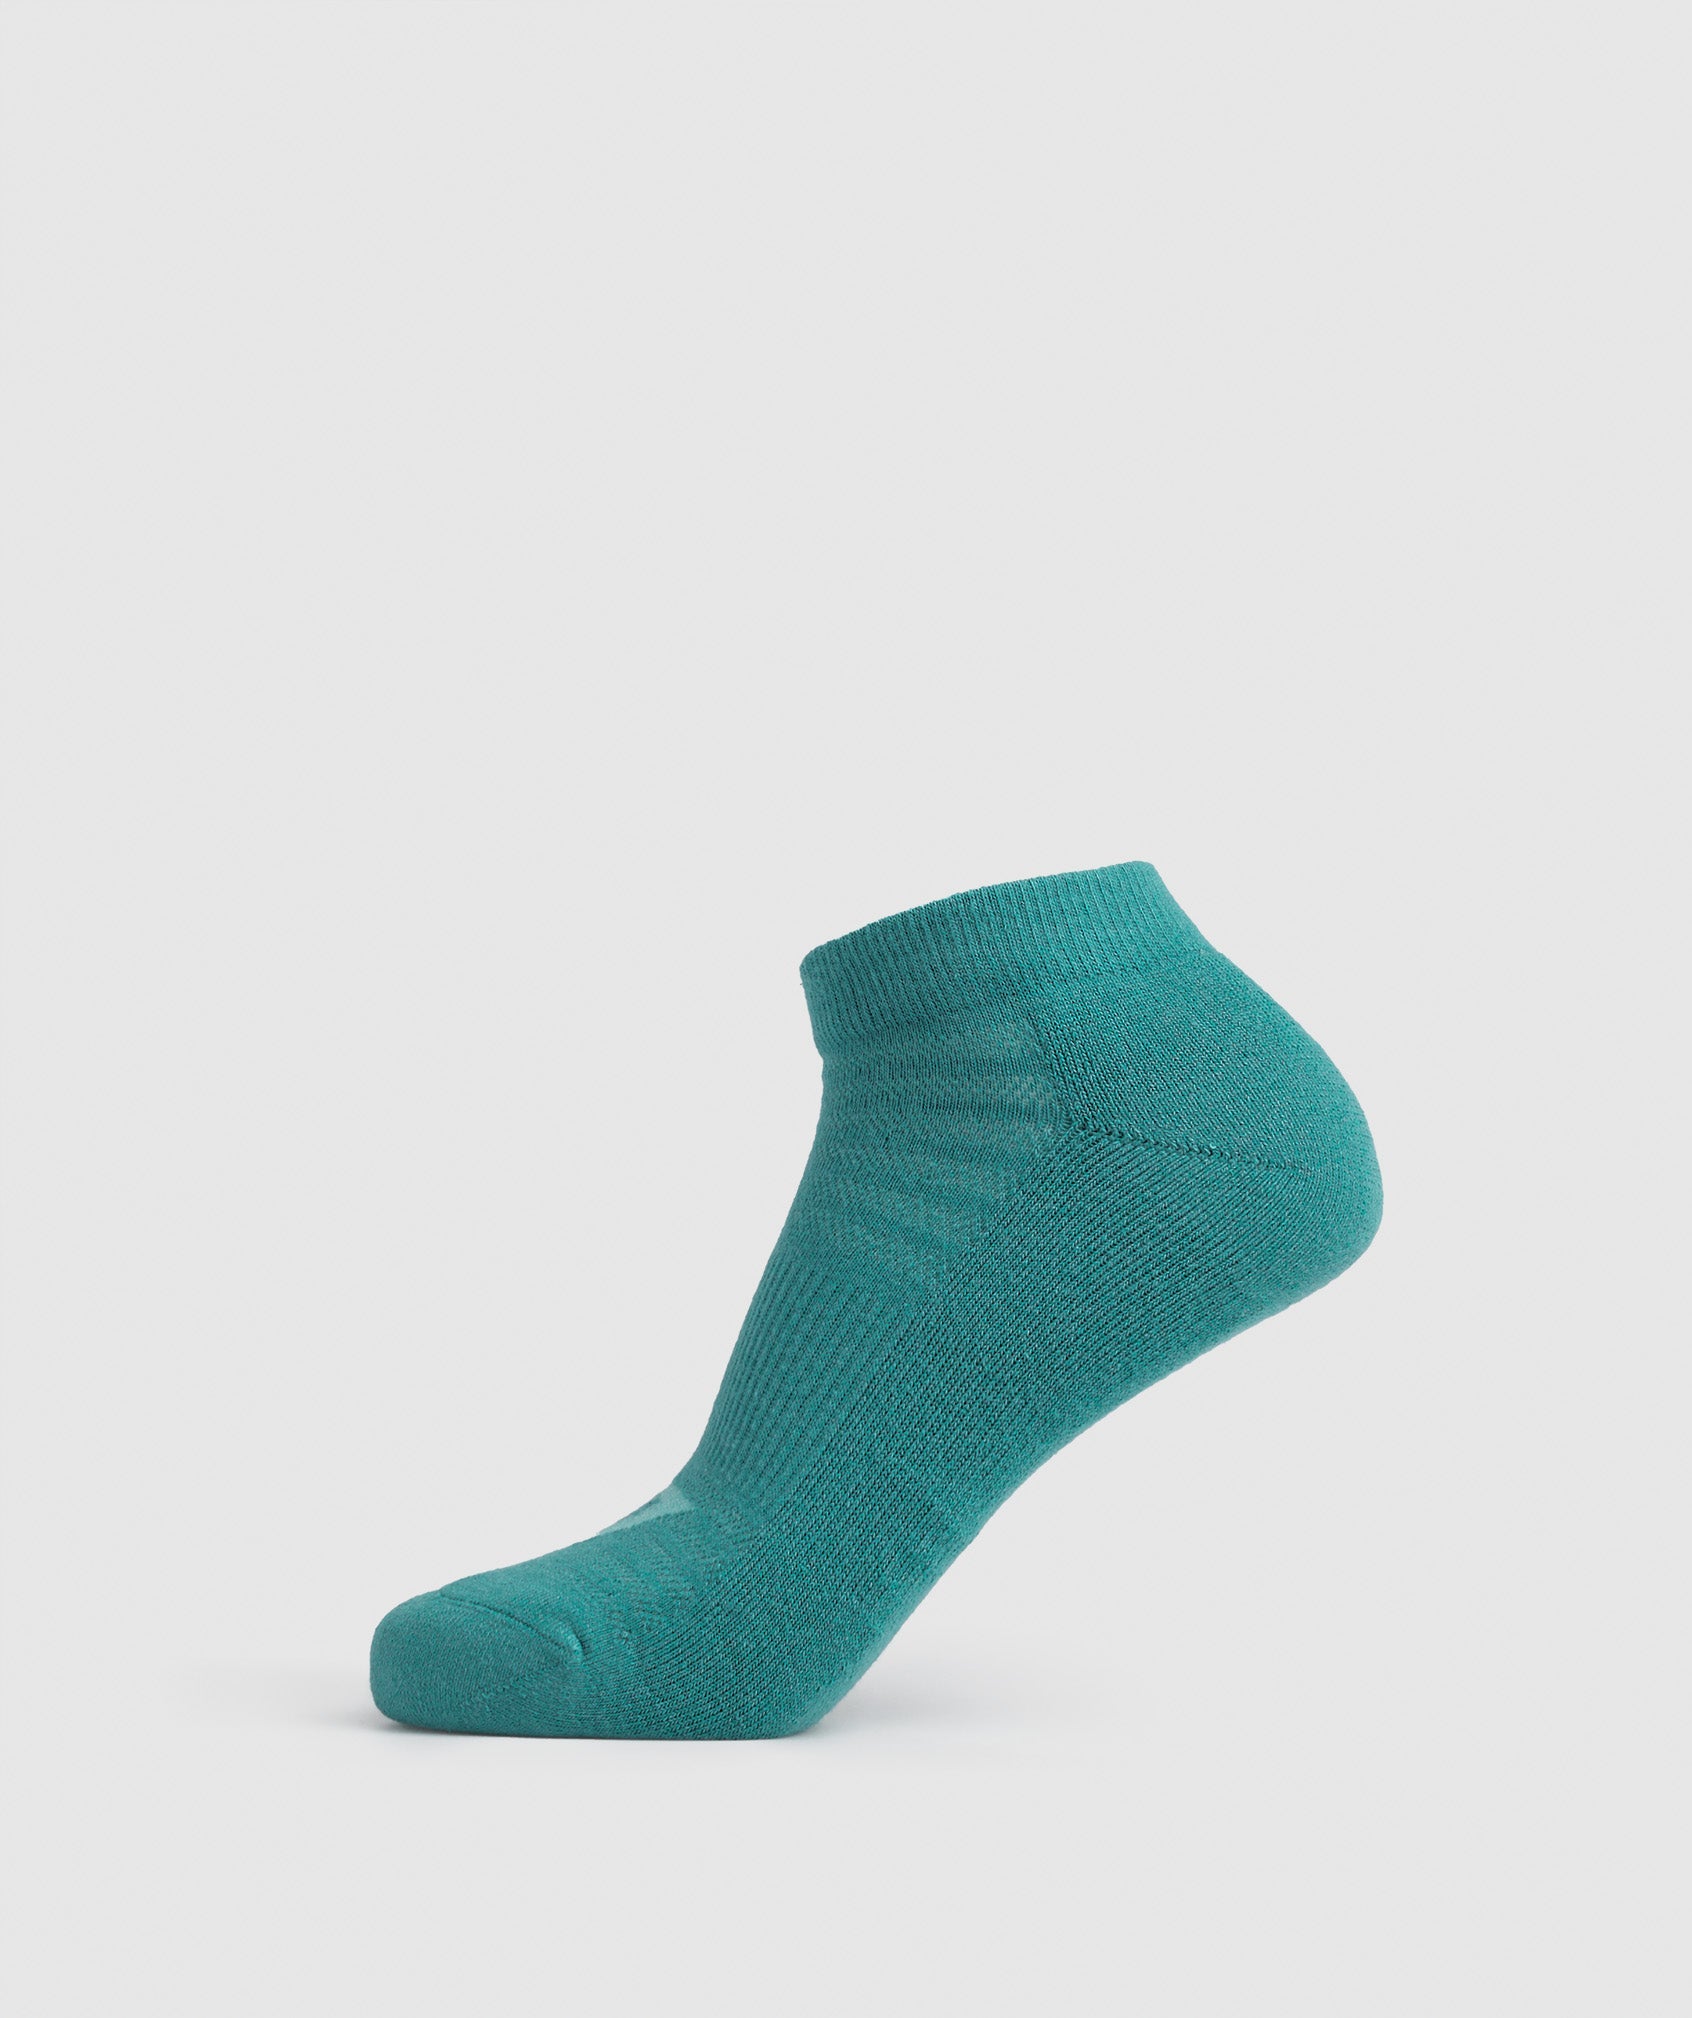 Ankle Socks 3pk in Blue/Jewel Green/Pebble Grey - view 6